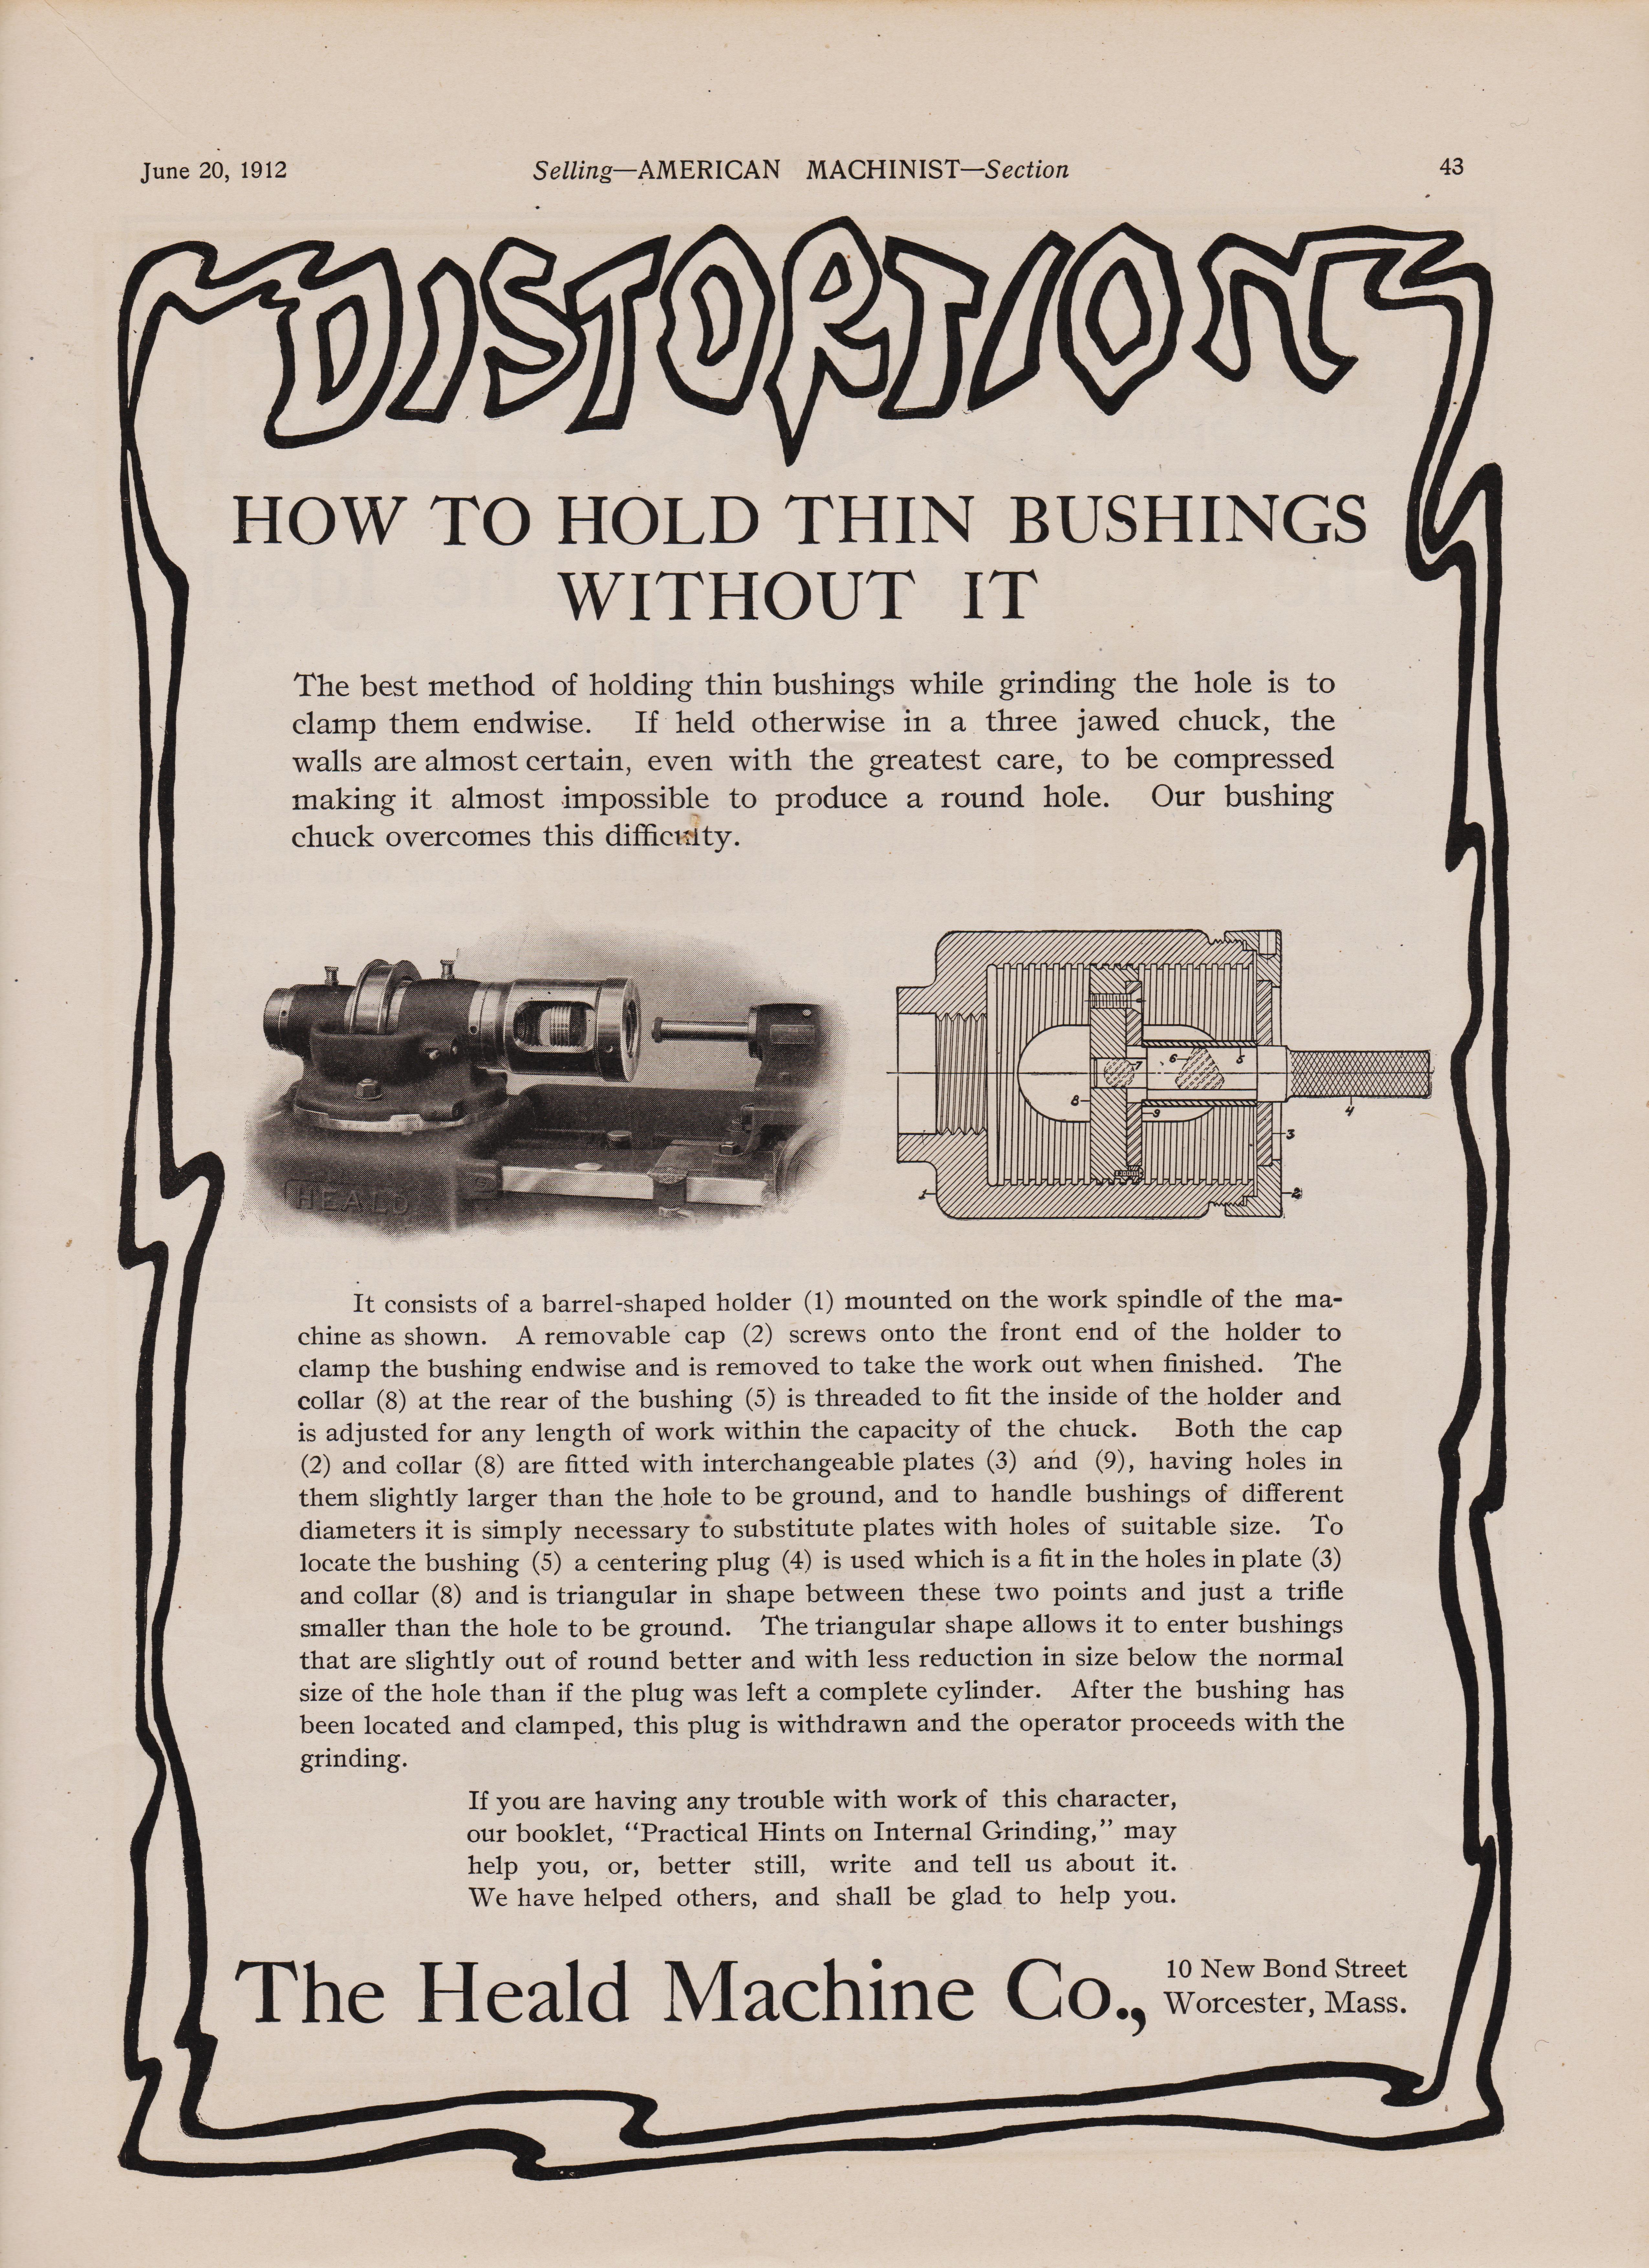 
https://antiquemachinery.com/images-2021/1912-American-Machinist-Magazine-1912-June-pg-43.jpeg